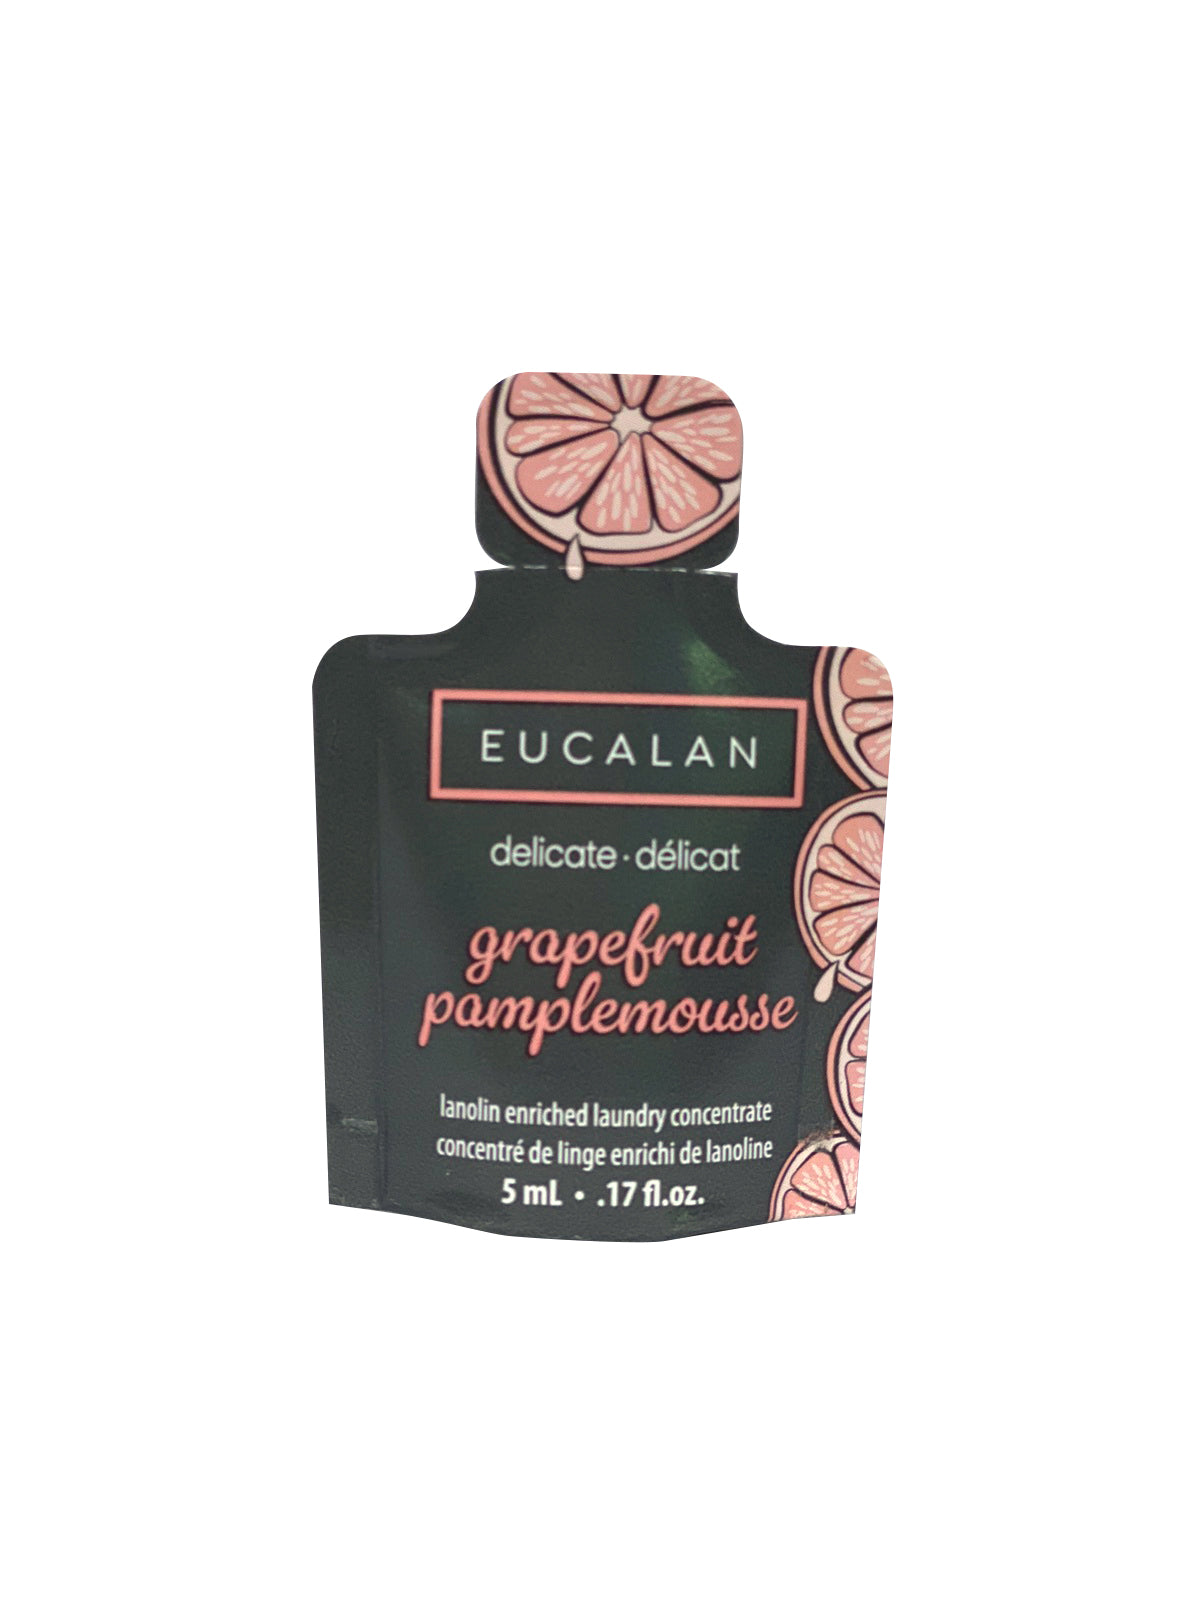 Single use packet of Eucalan Grapfruit